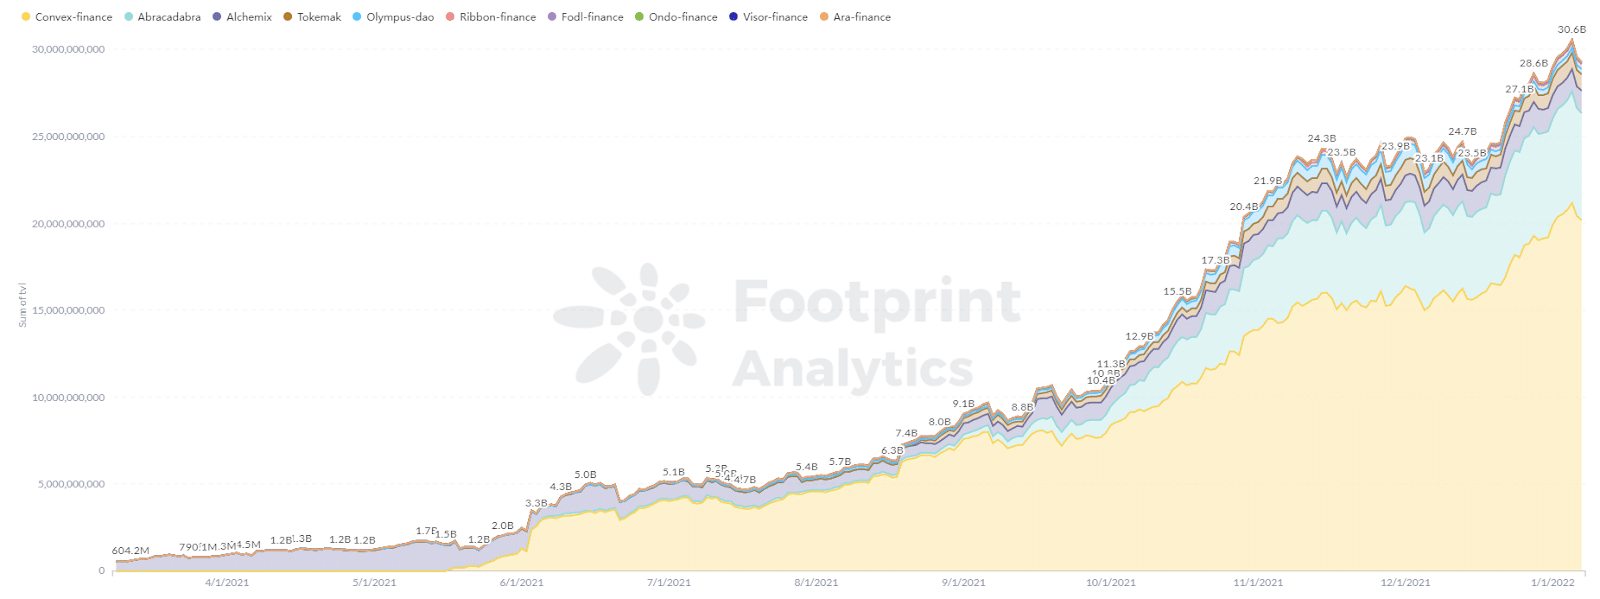 Footprint Analytics - La TVL des projets DeFi 2.0 a grimpé de 0 à 30 milliards en 2021